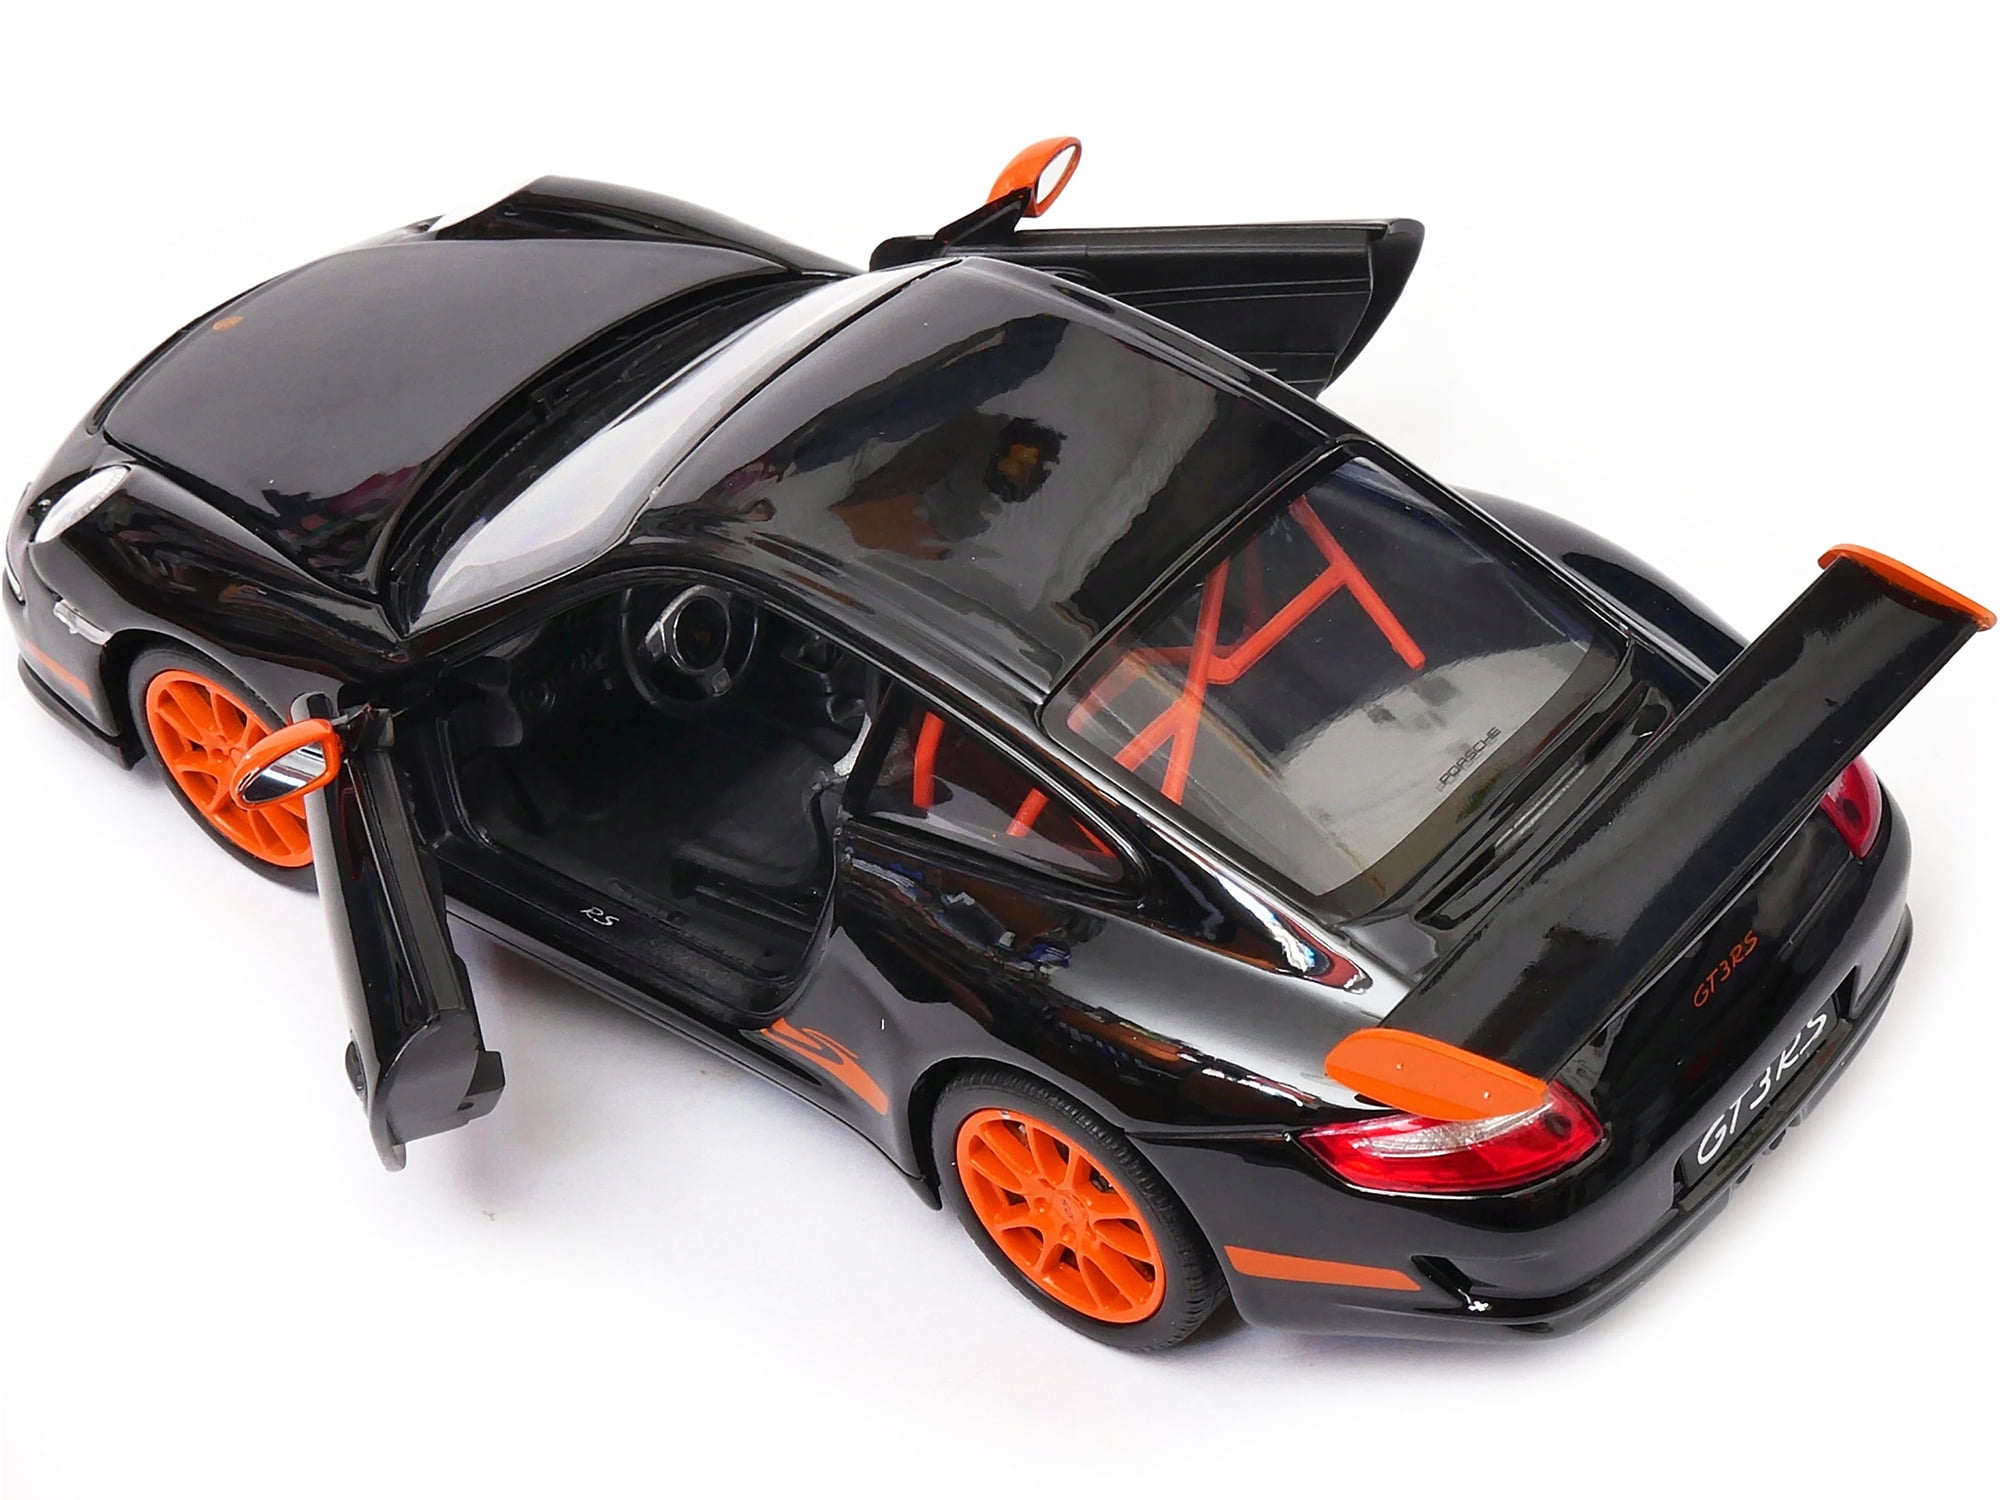 PORSCHE 911 GT3 RS 4.0 OFFICIAL REMOTE CONTROL CAR LIGHTS BOYS GIRLS TOYS  BLACK 